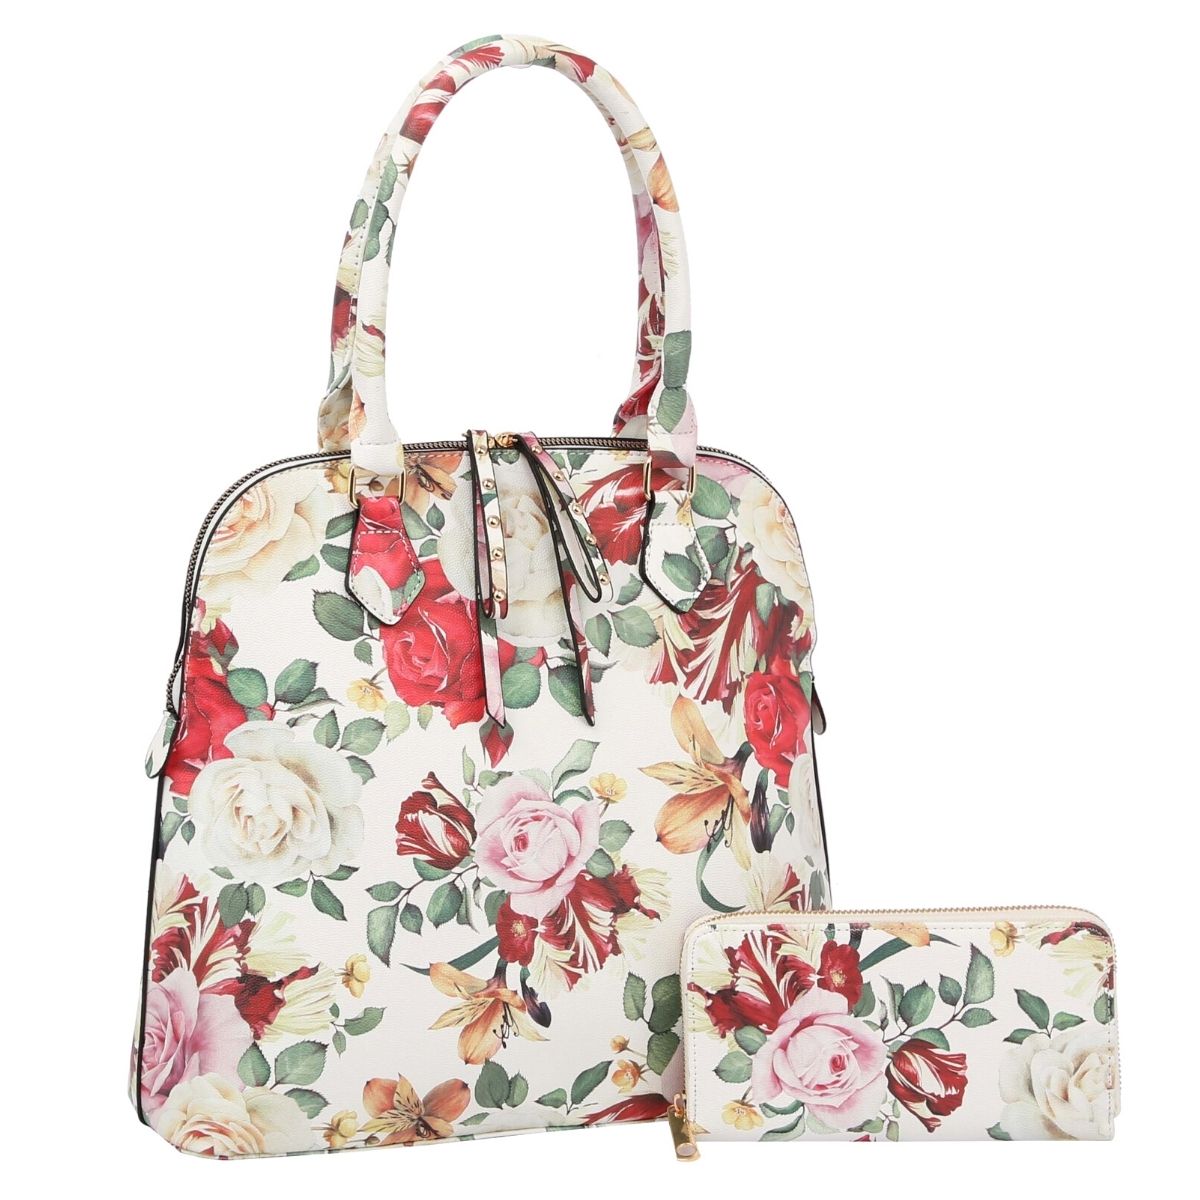 The Rose Tote Handbag Set